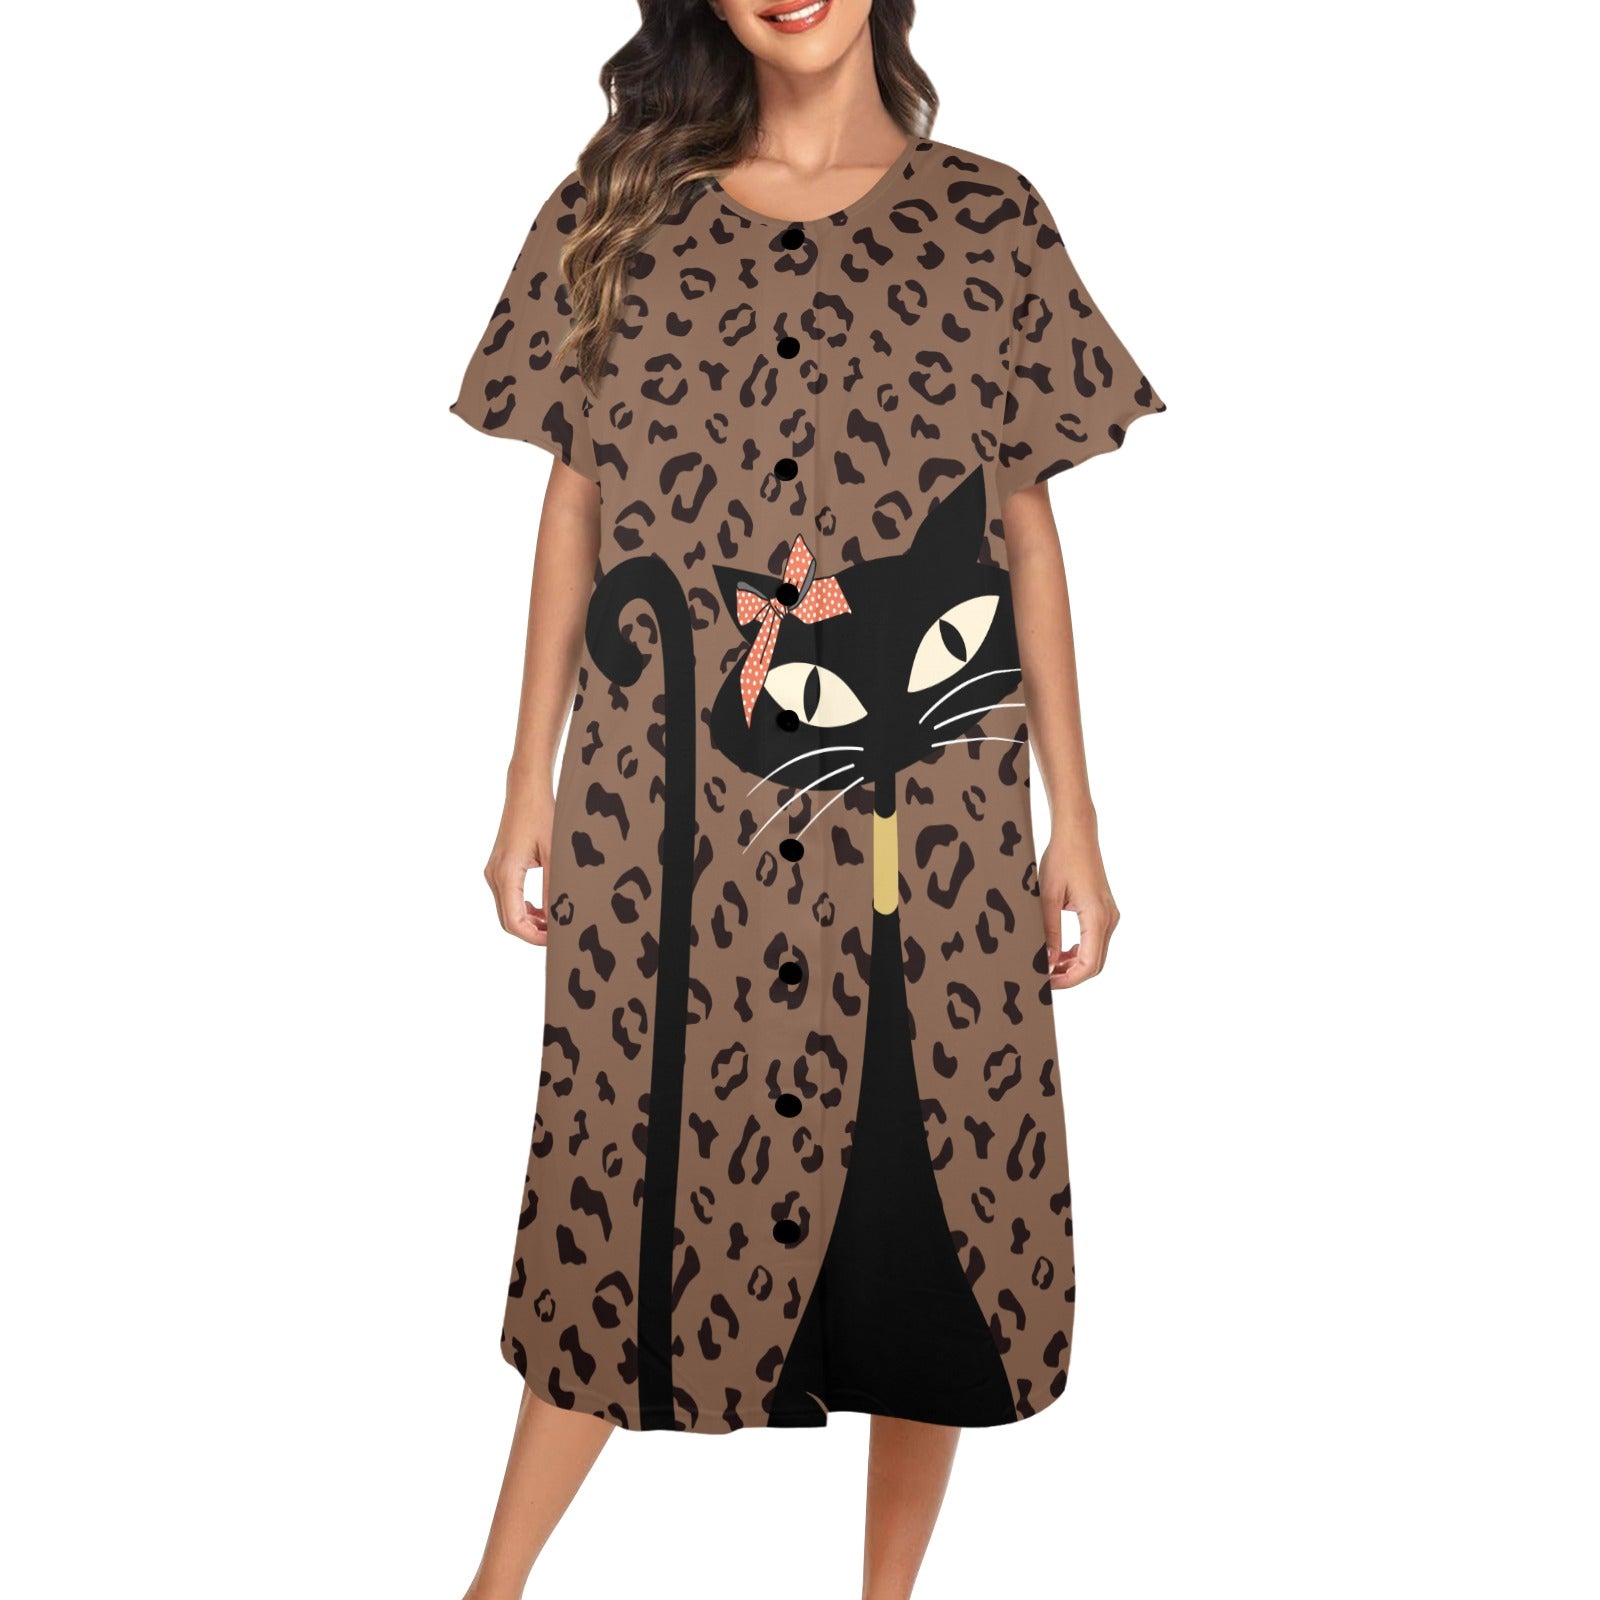 Leopard Jungle Print Atomic Cat Modern Day Kitsch Muumu Dress